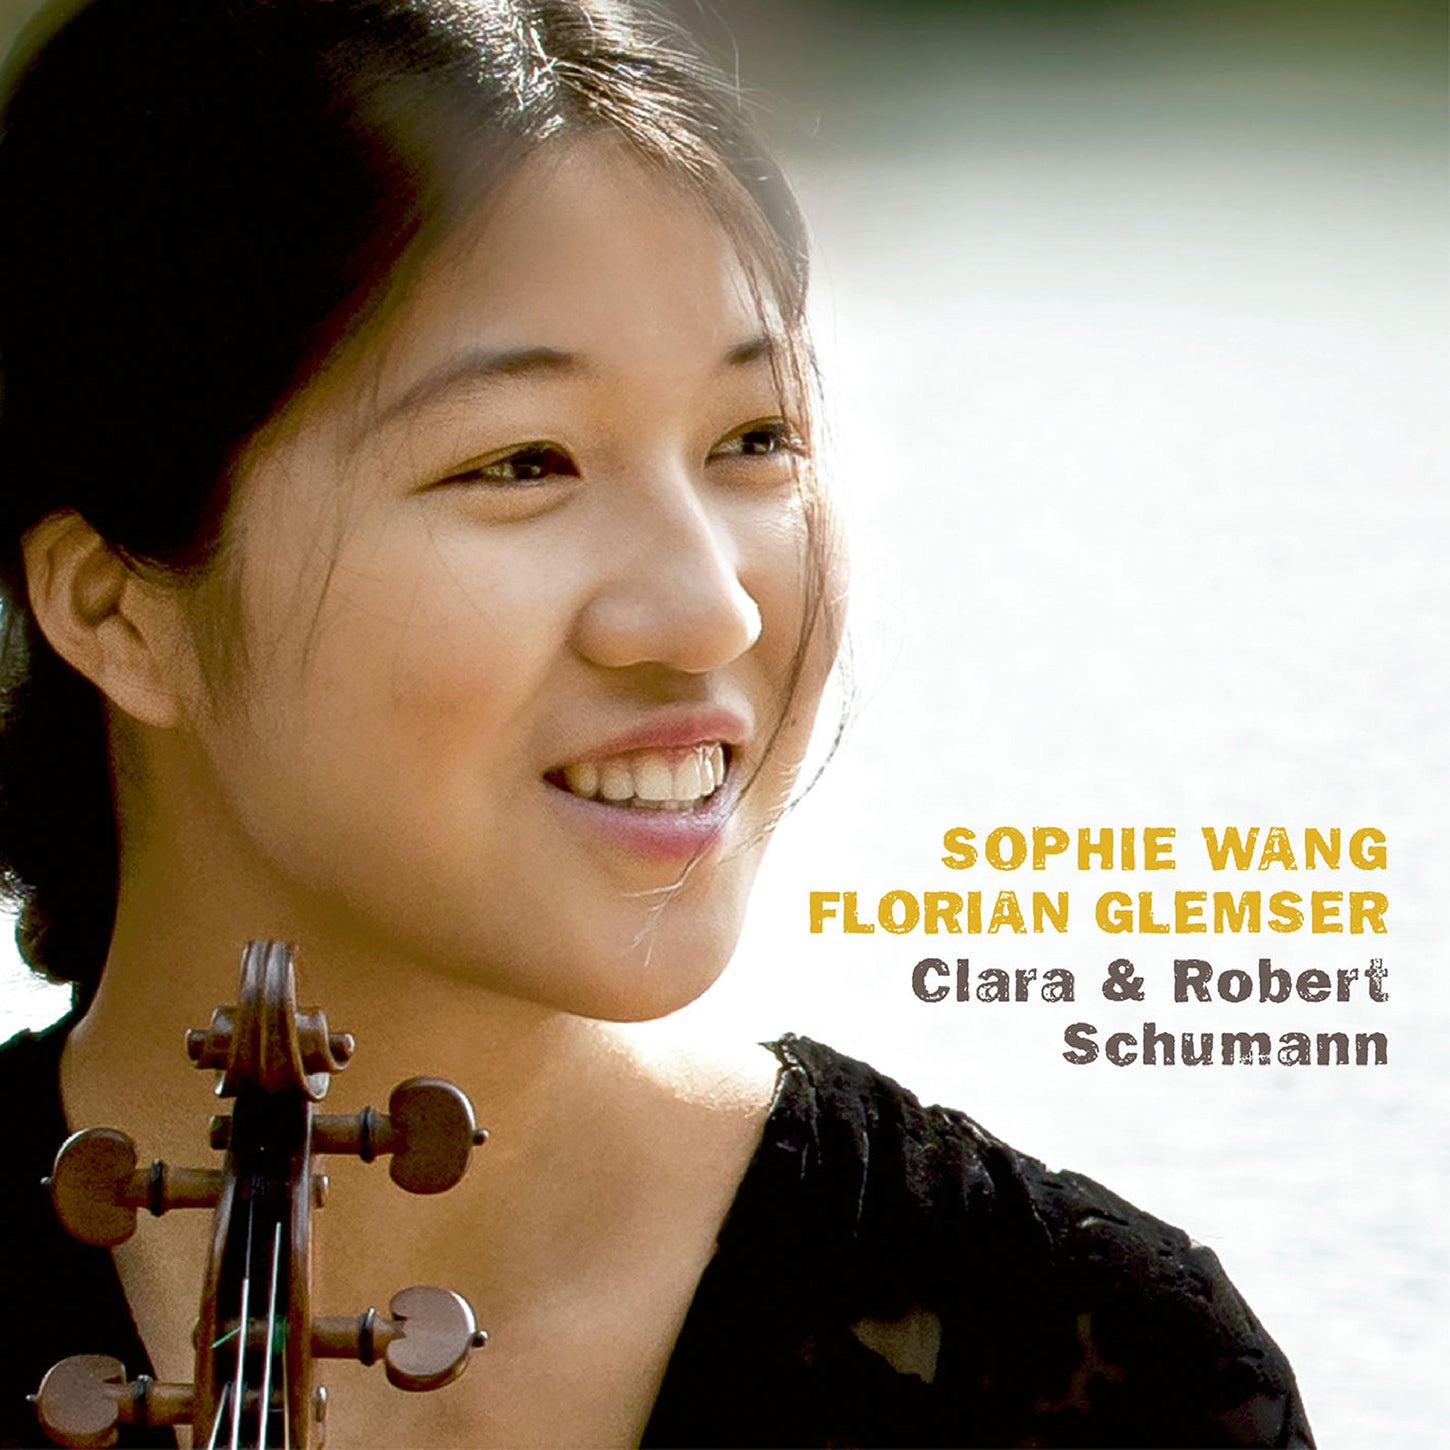 Clara & Robert Schumann (with works by Brahms & Ernst) / S. Wang, F. Glemser